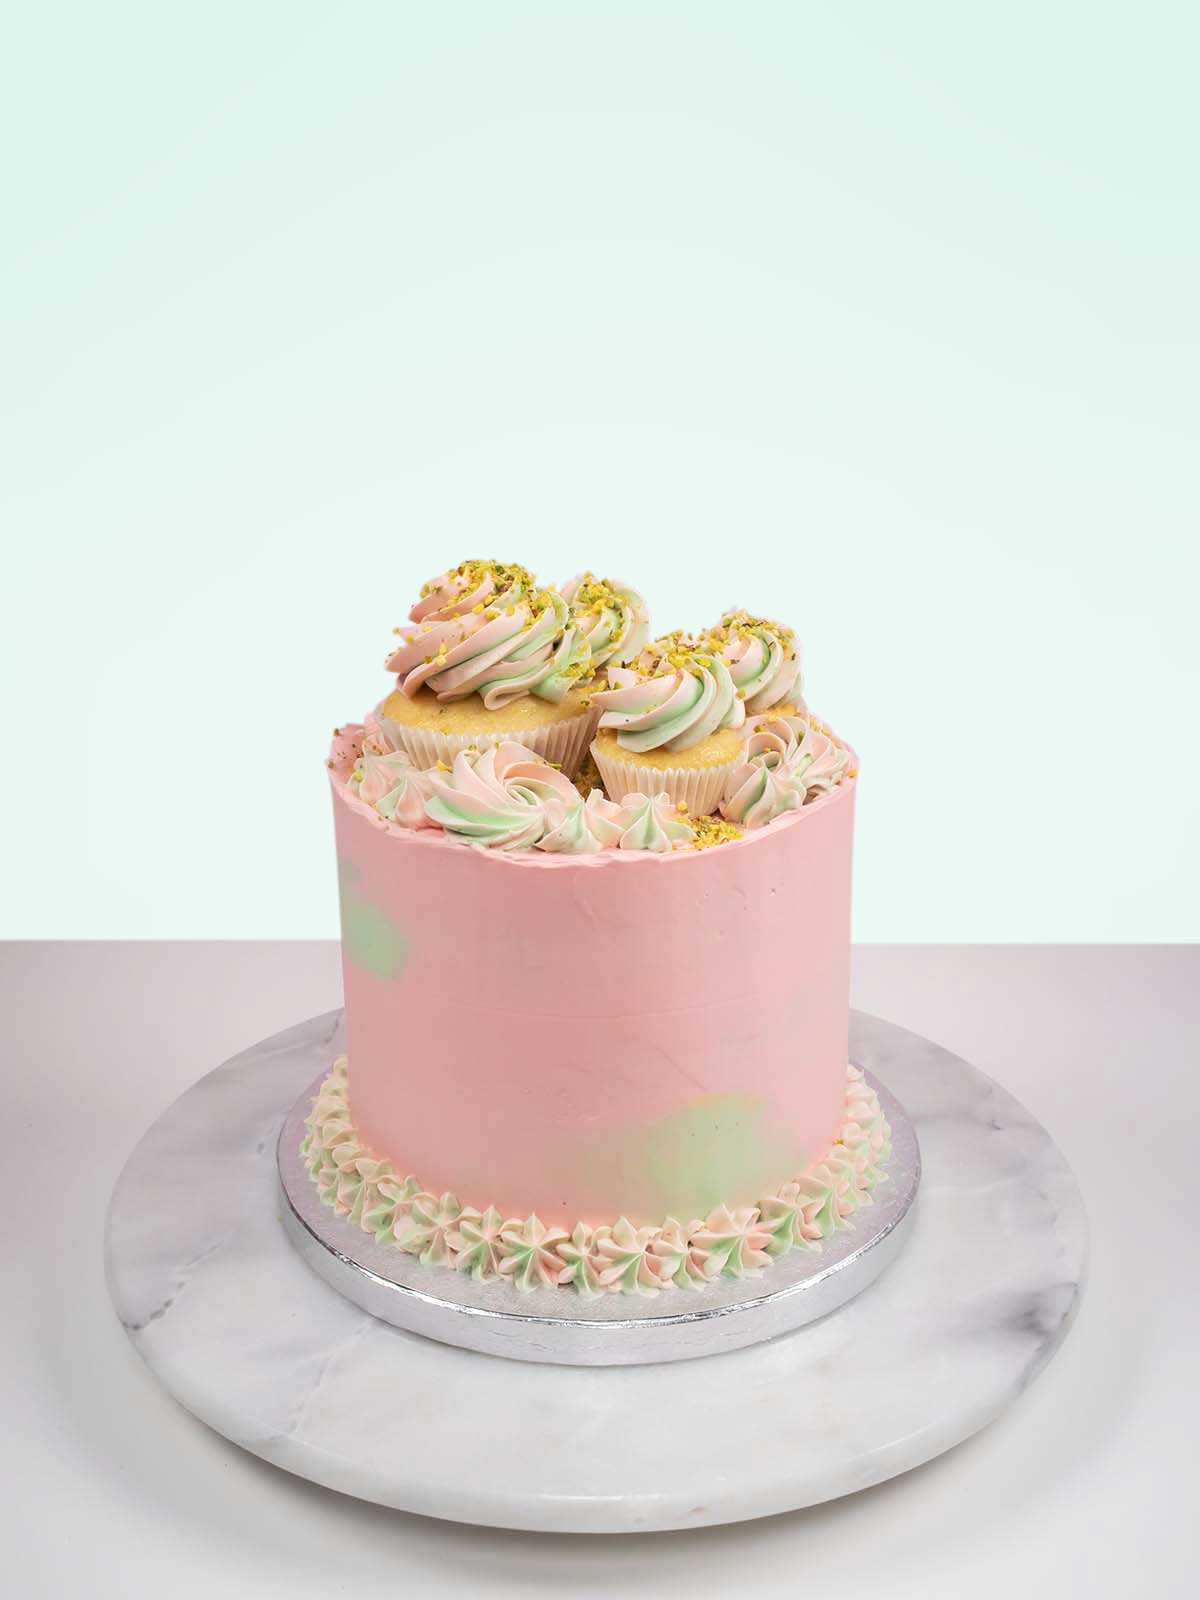 Simple 40th birthday cake - Cakes by Carolyne | Facebook